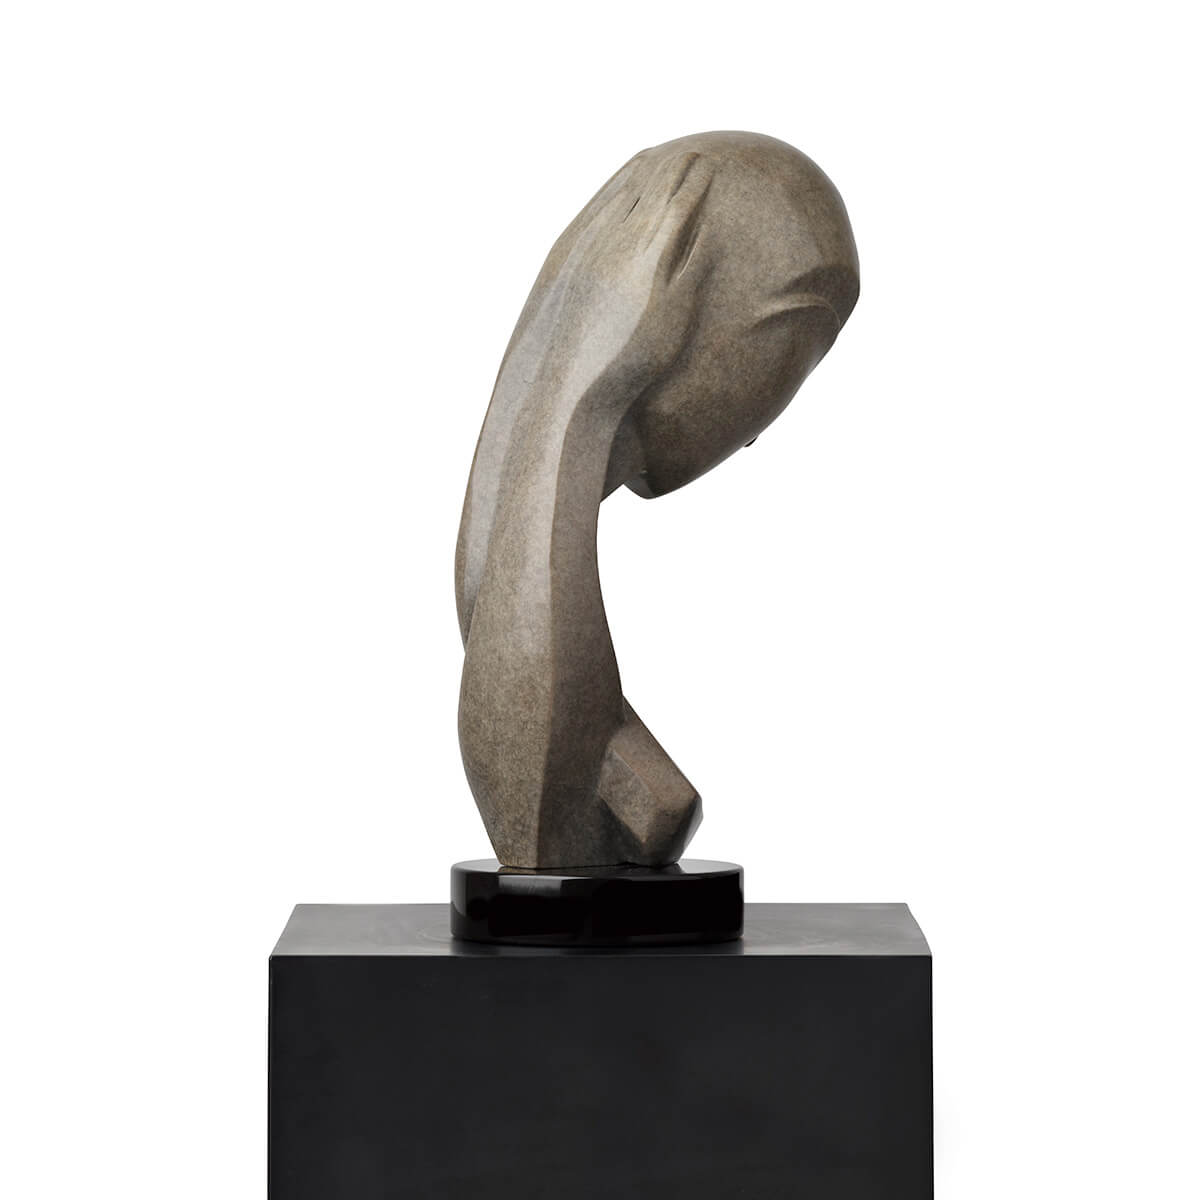 Robert-Helle-Sculpture-Gallery-Knowing-4-1200x1200